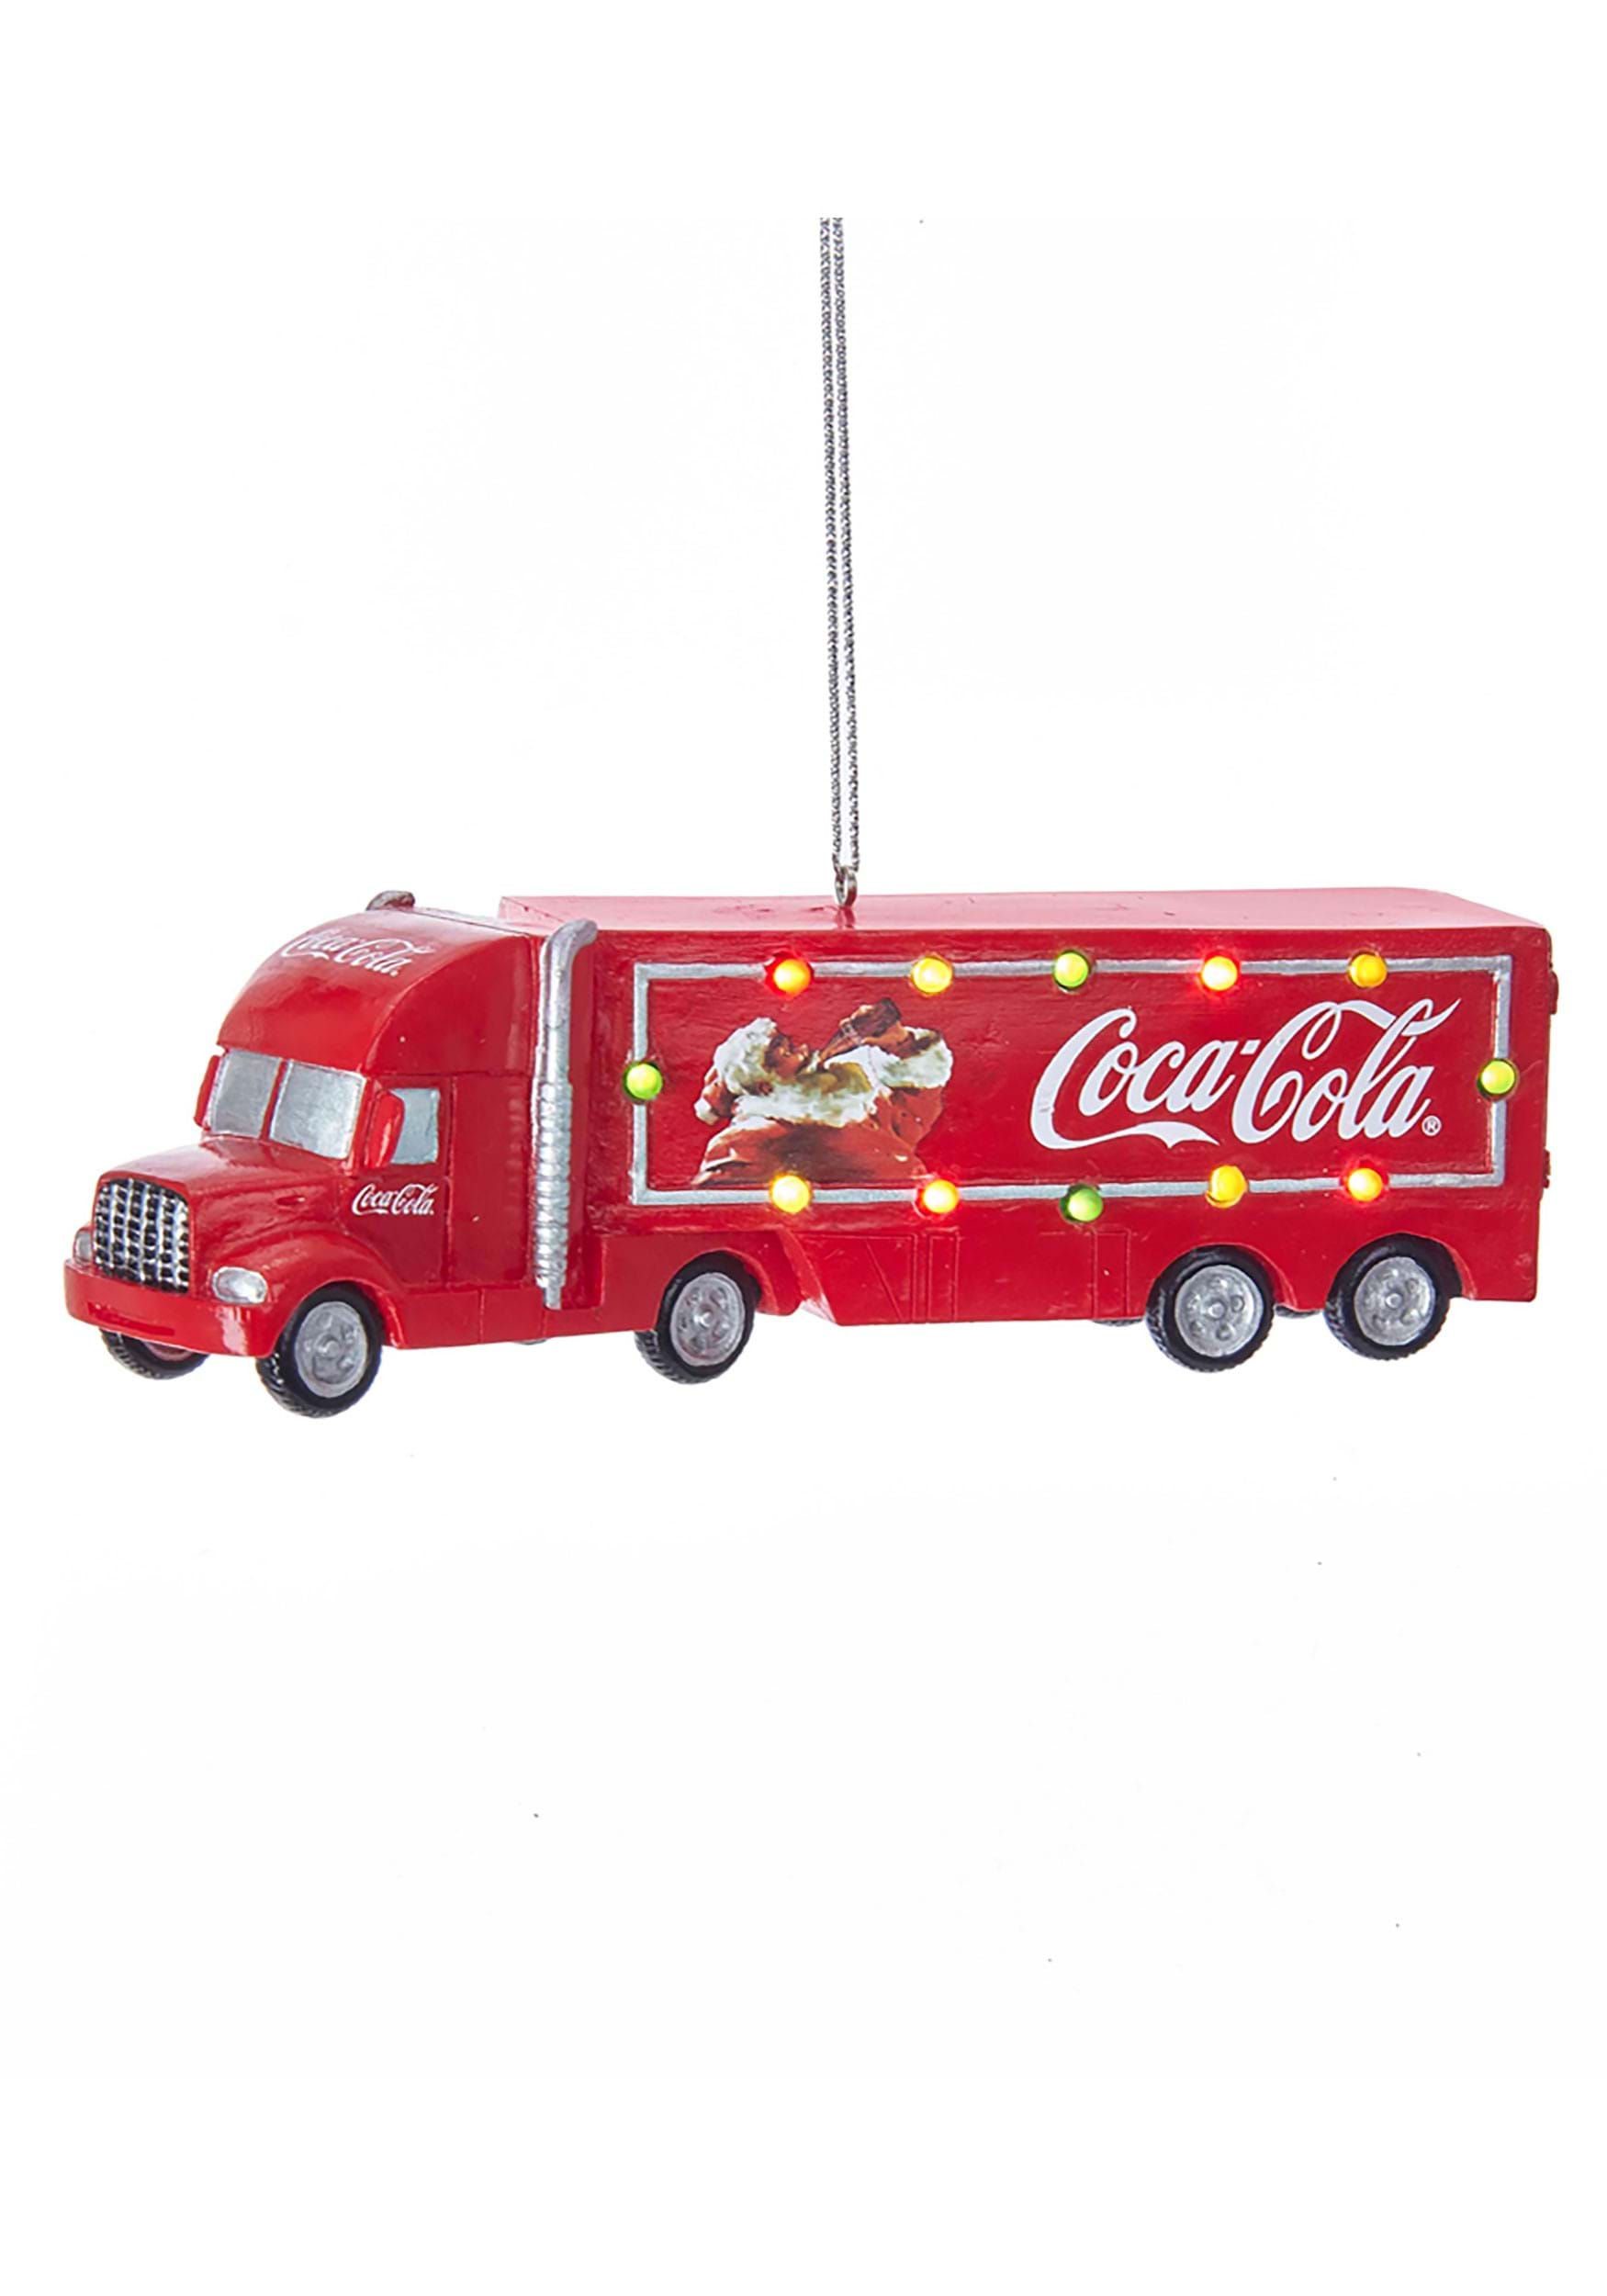 Coca-Cola Truck with Lights Ornament